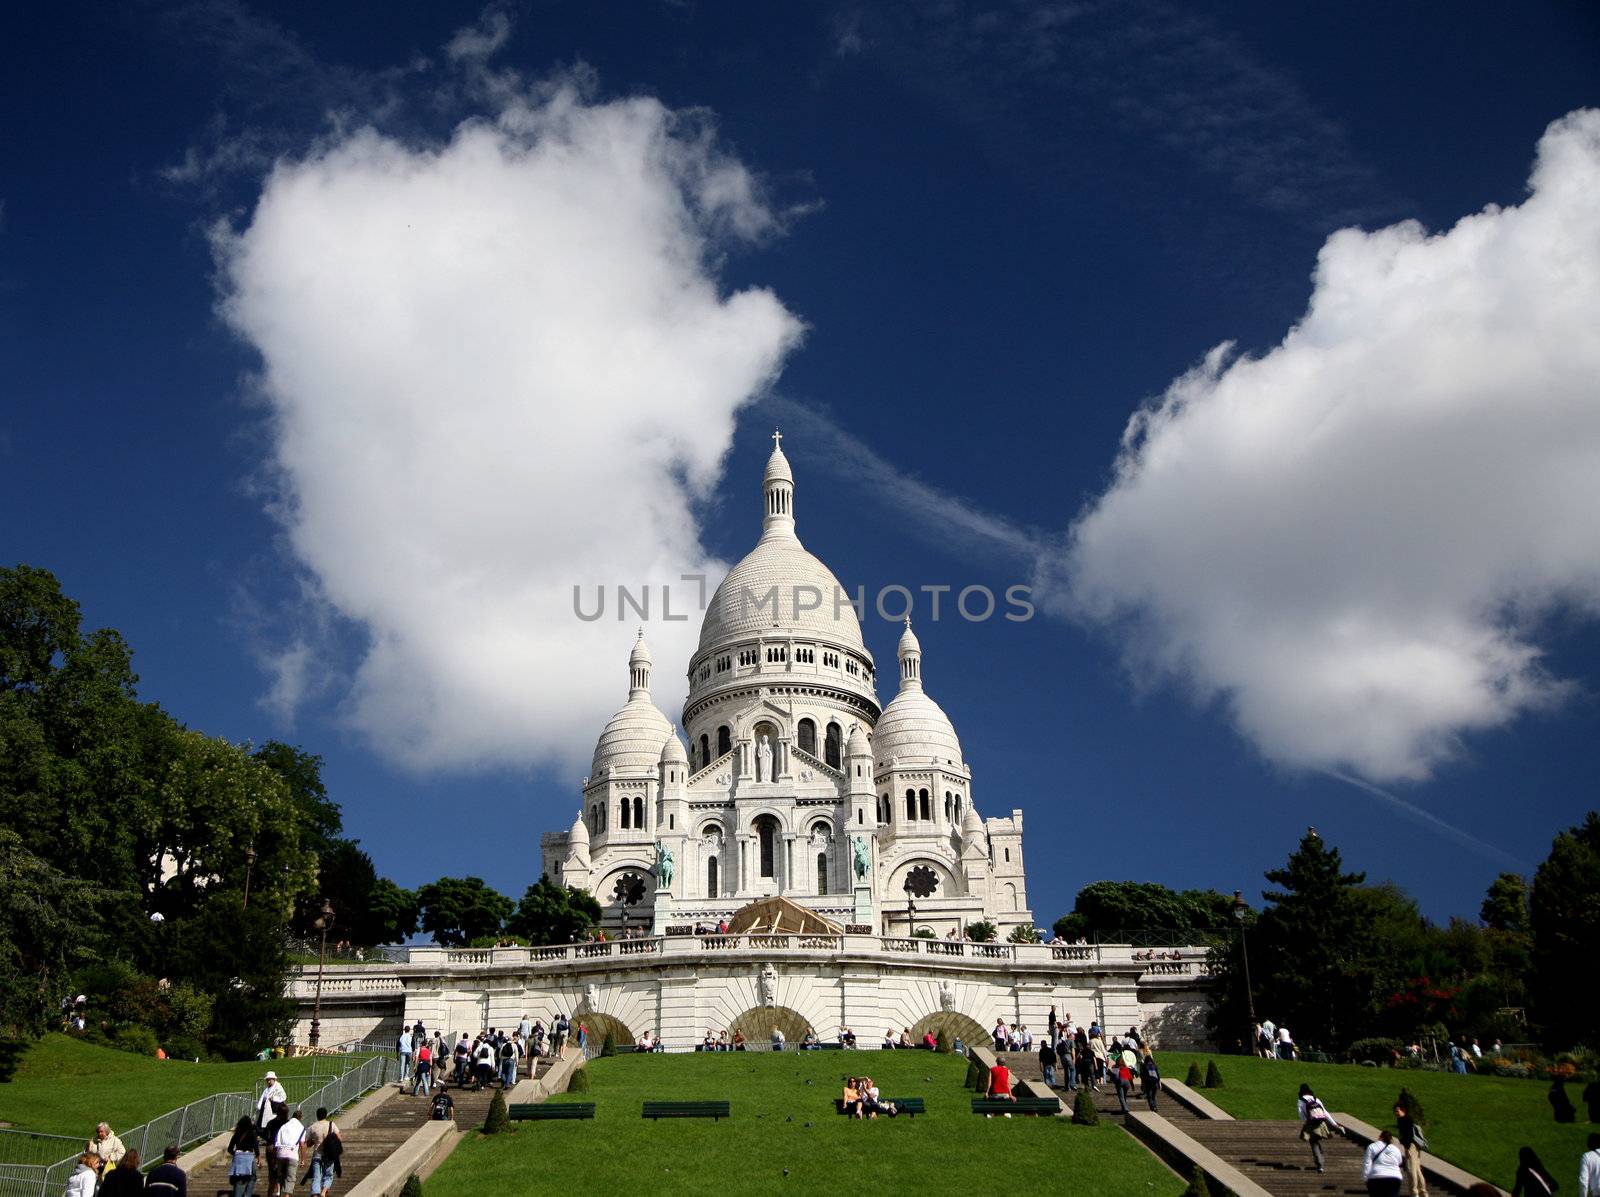 The Sacre Coeur in Paris, France.